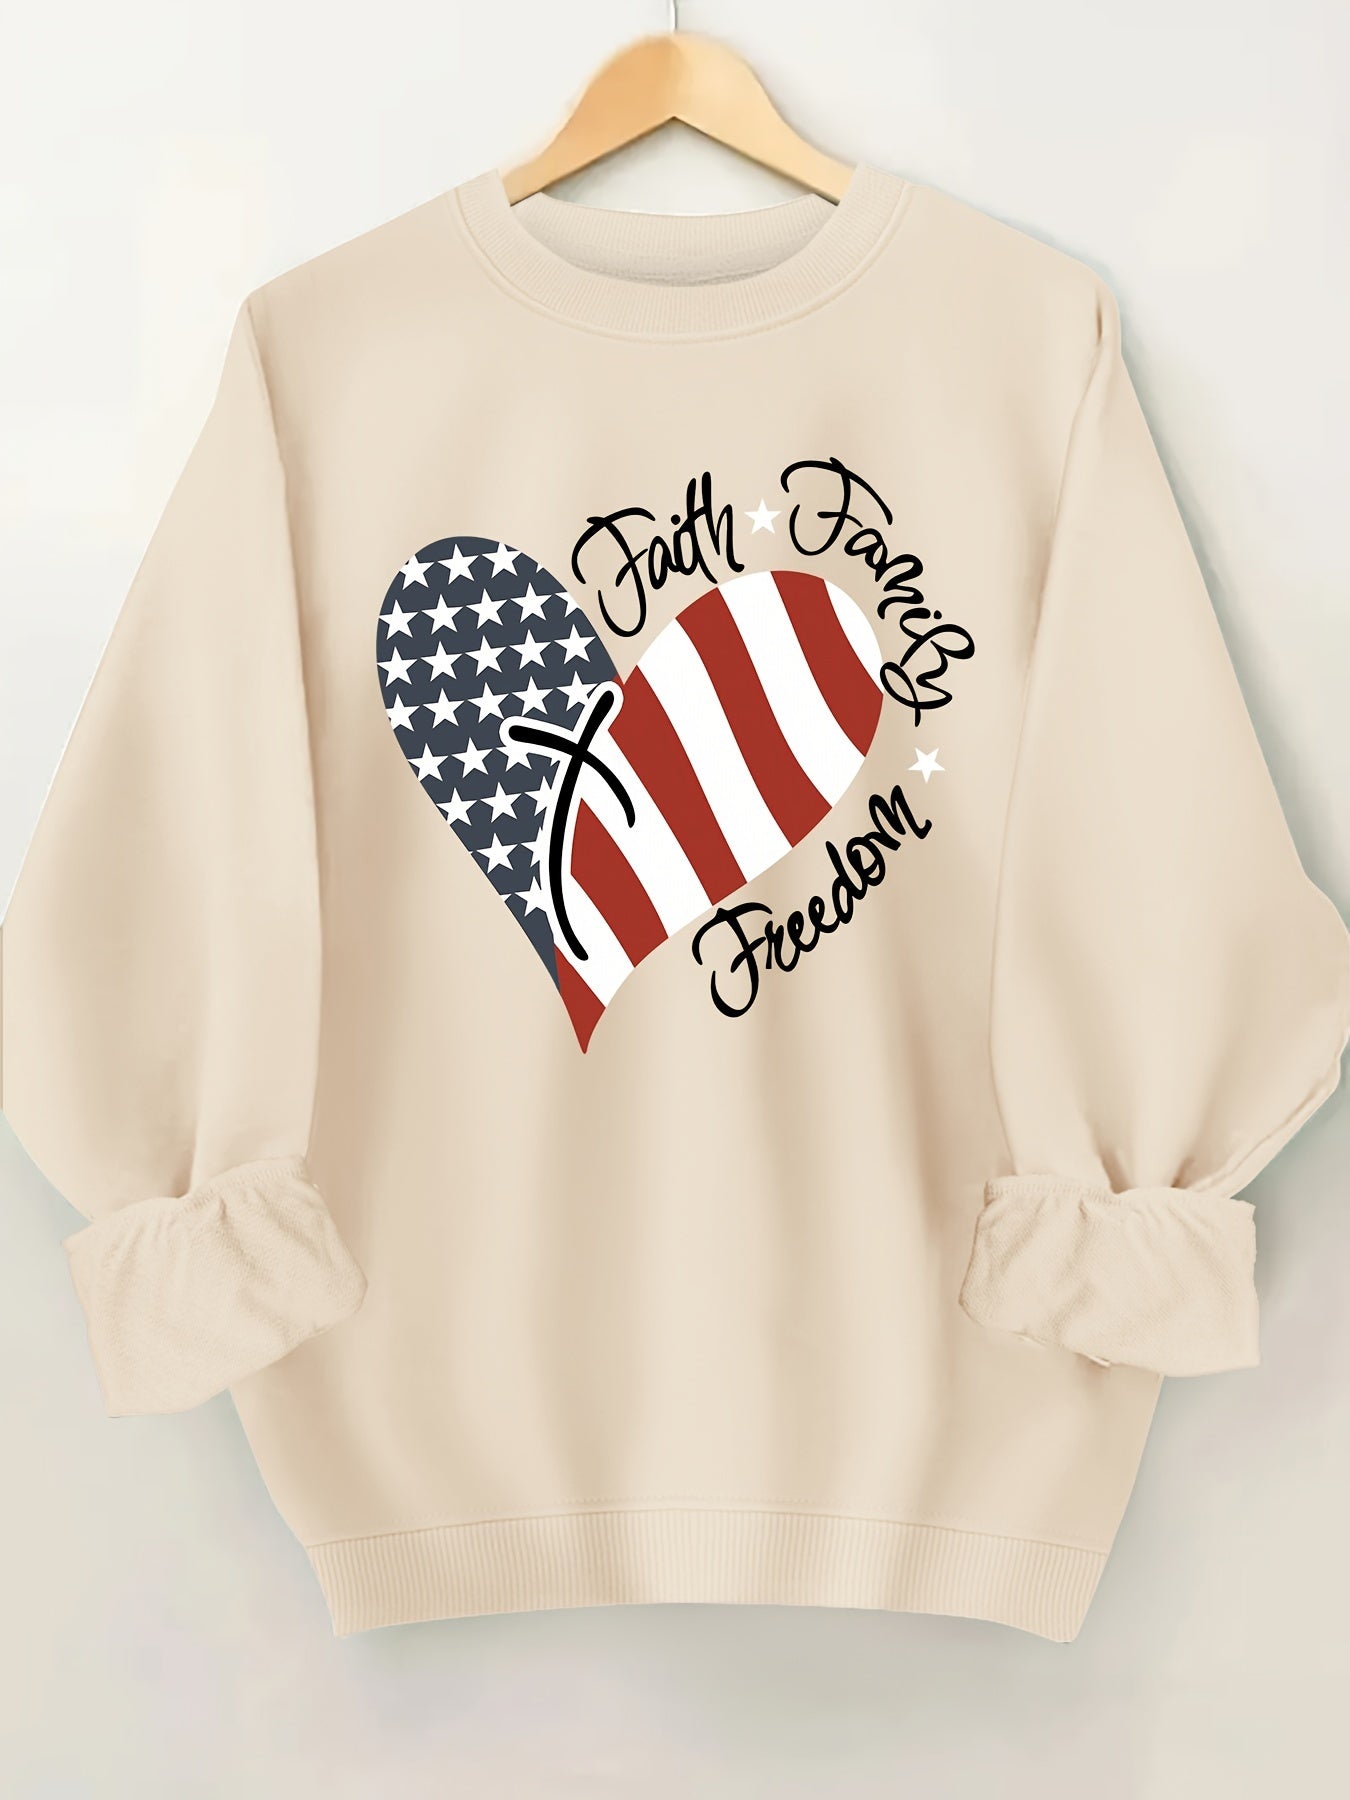 Faith Family Freedom (American flag) Plus Size Women's Christian Pullover Sweatshirt claimedbygoddesigns